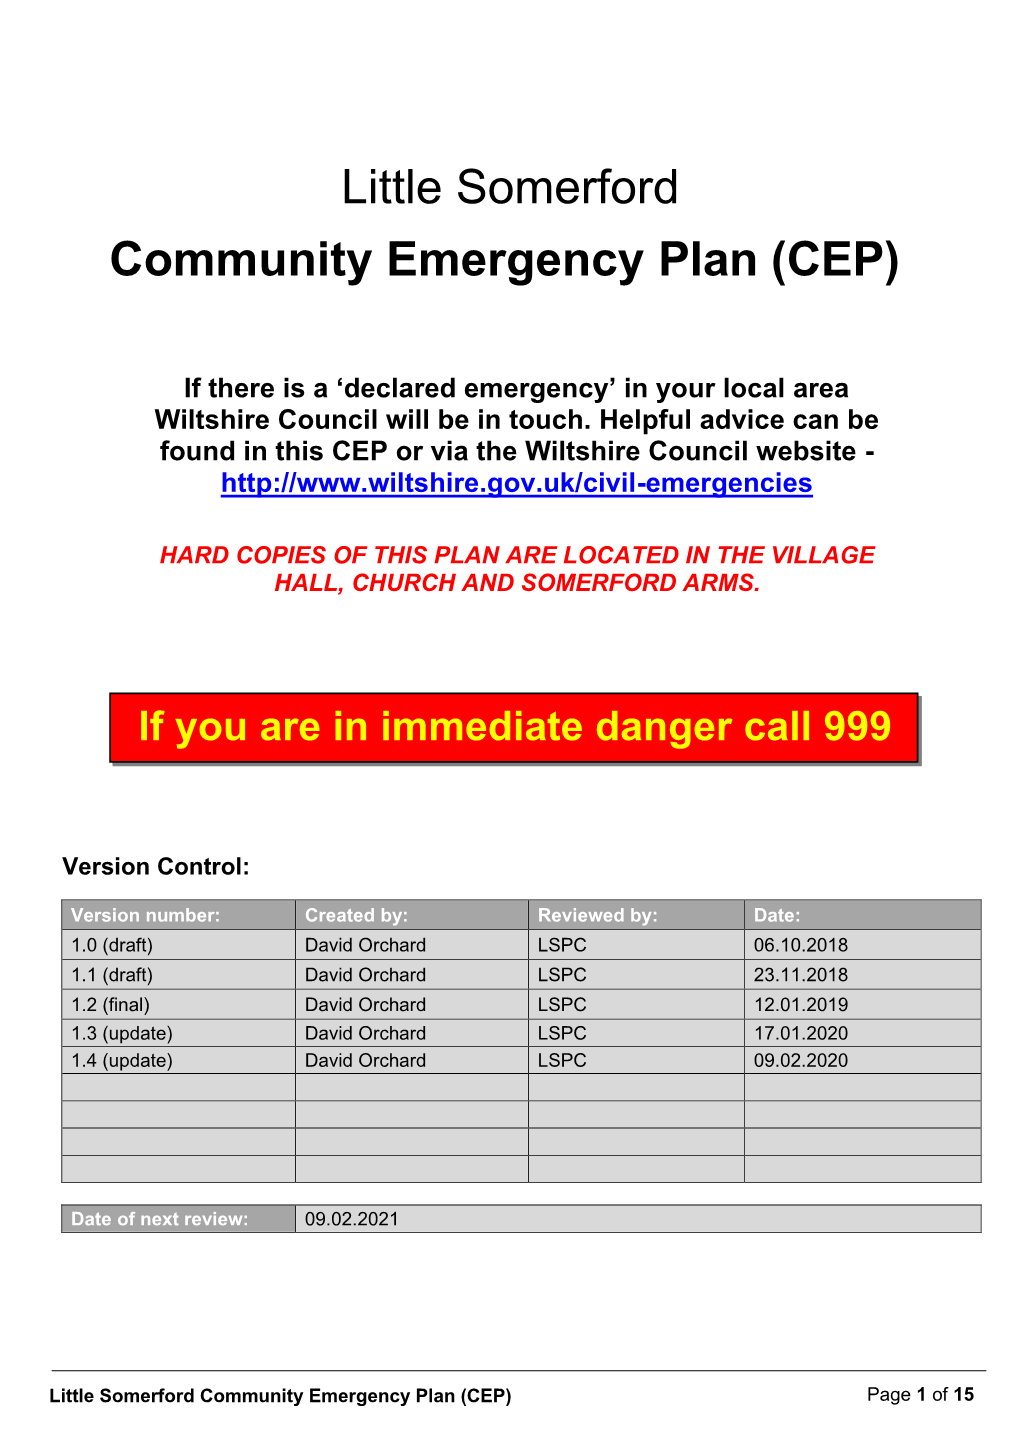 Little Somerford Community Emergency Plan (CEP)